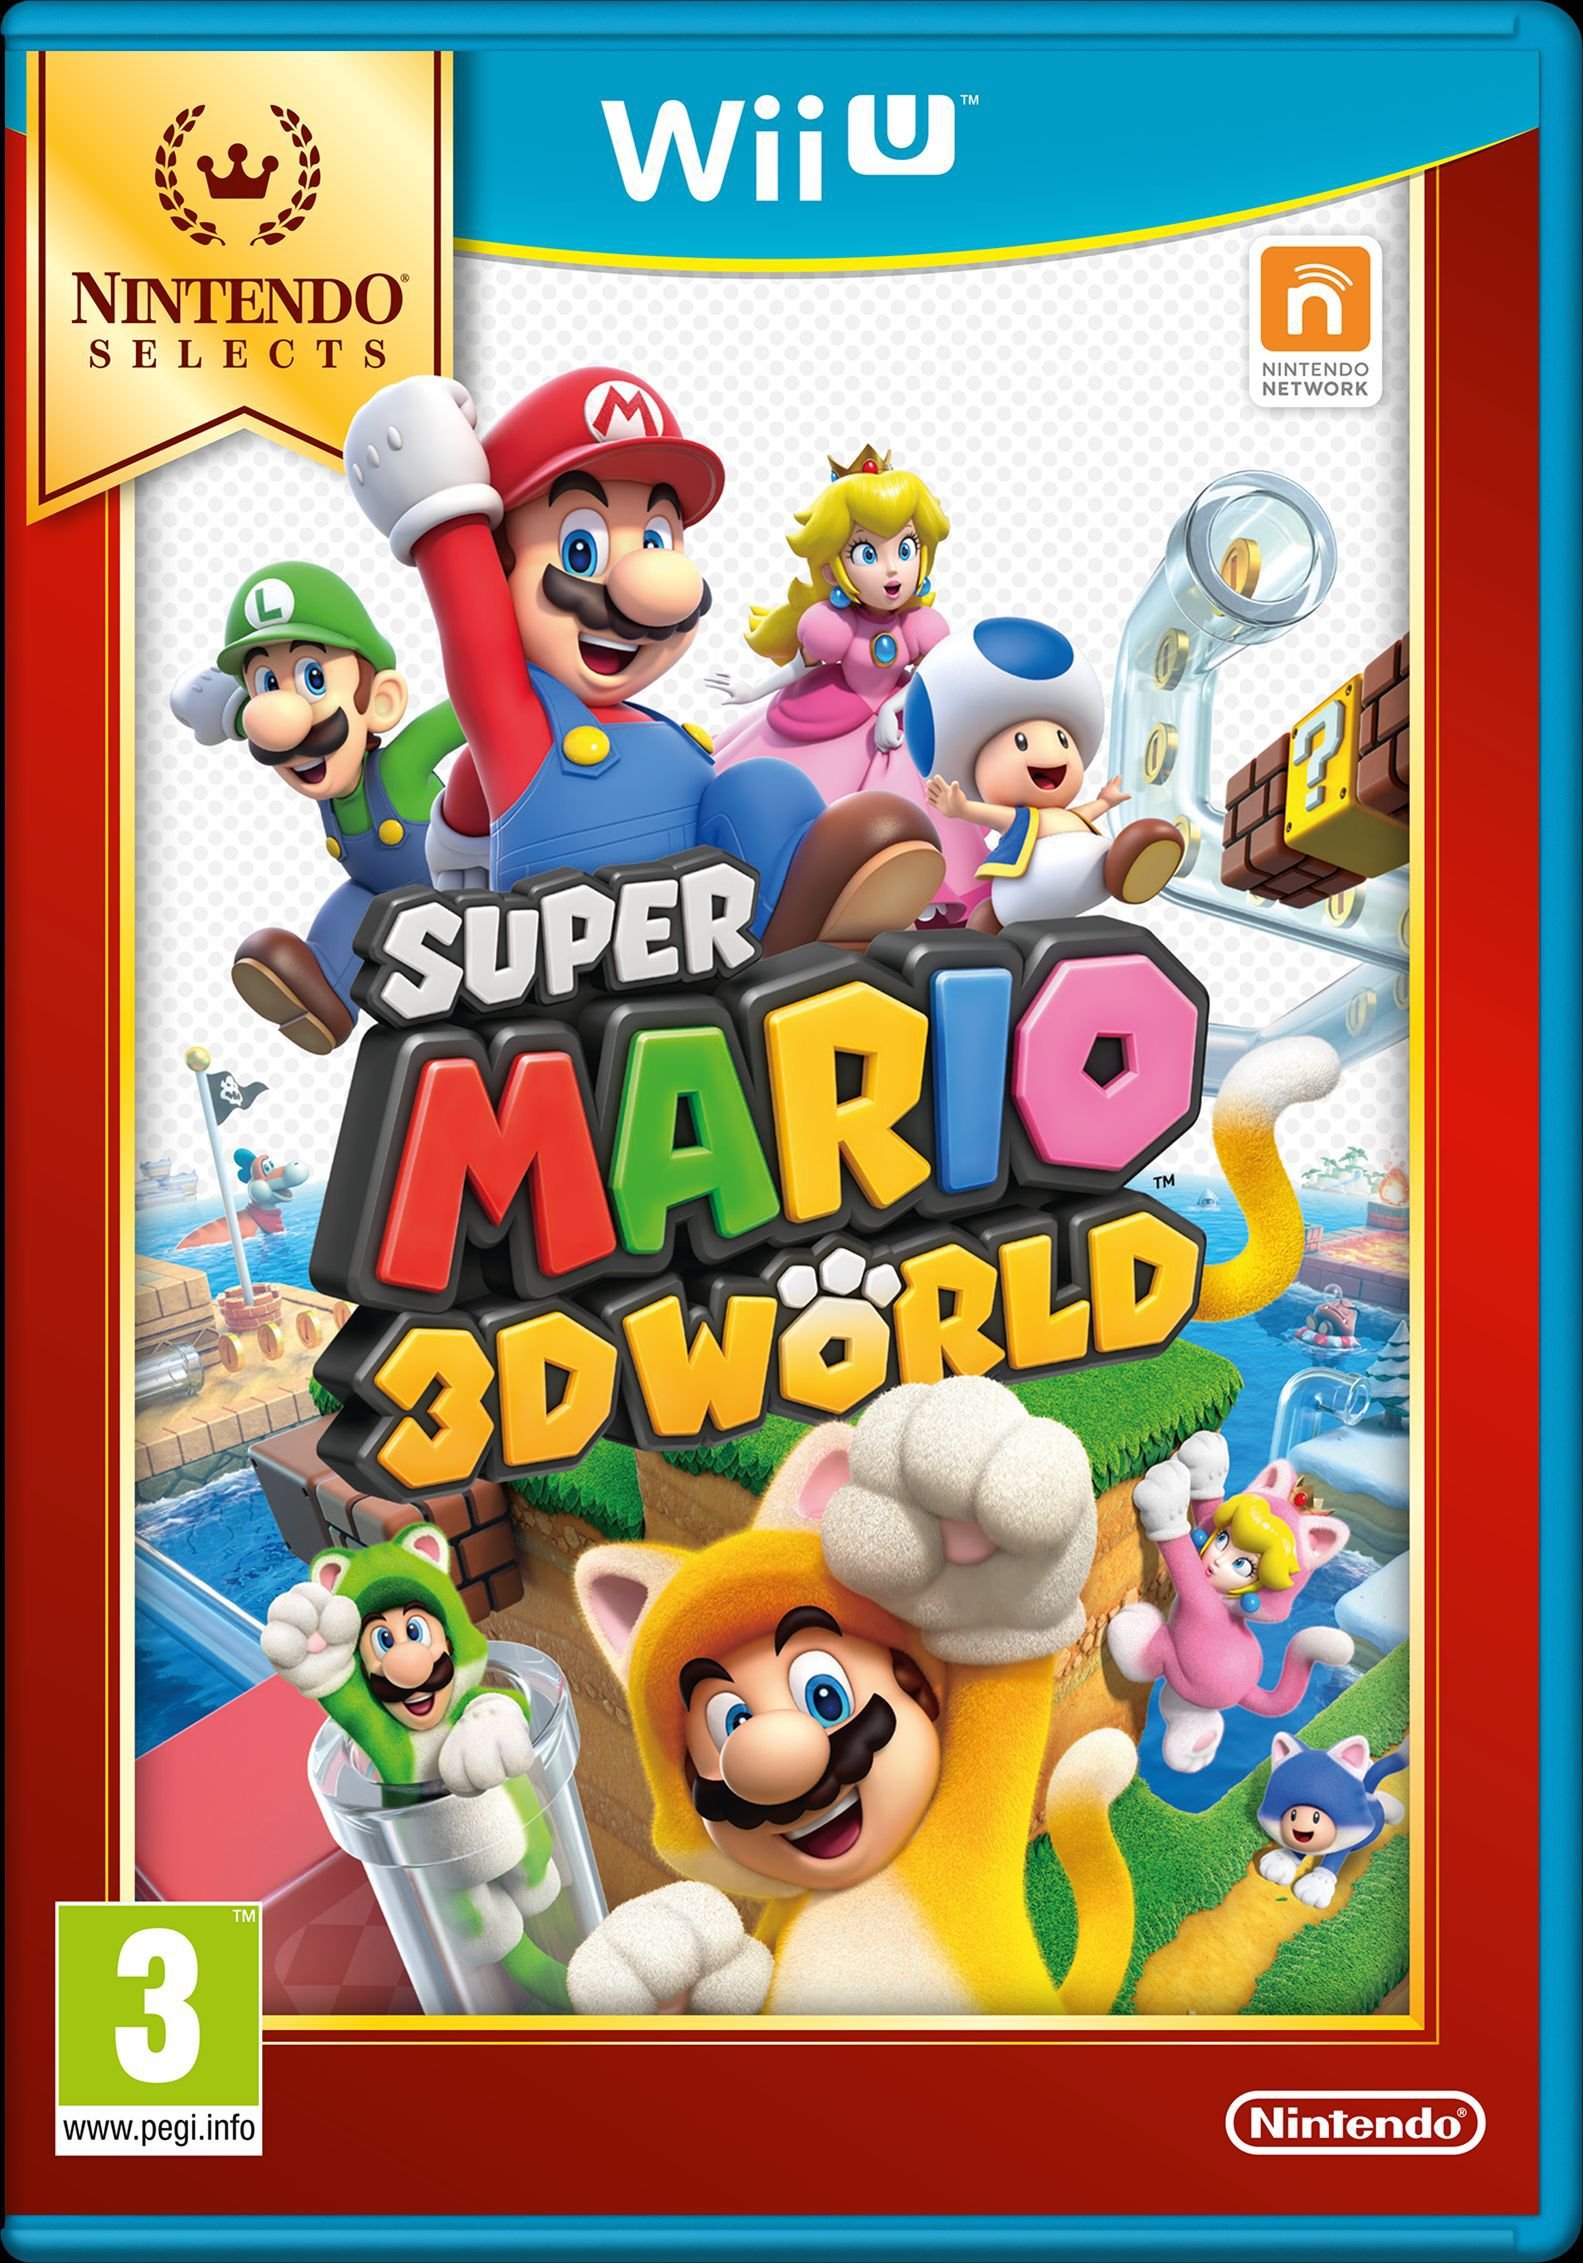 Mario 3D World Nintendo Wii U Game. Review